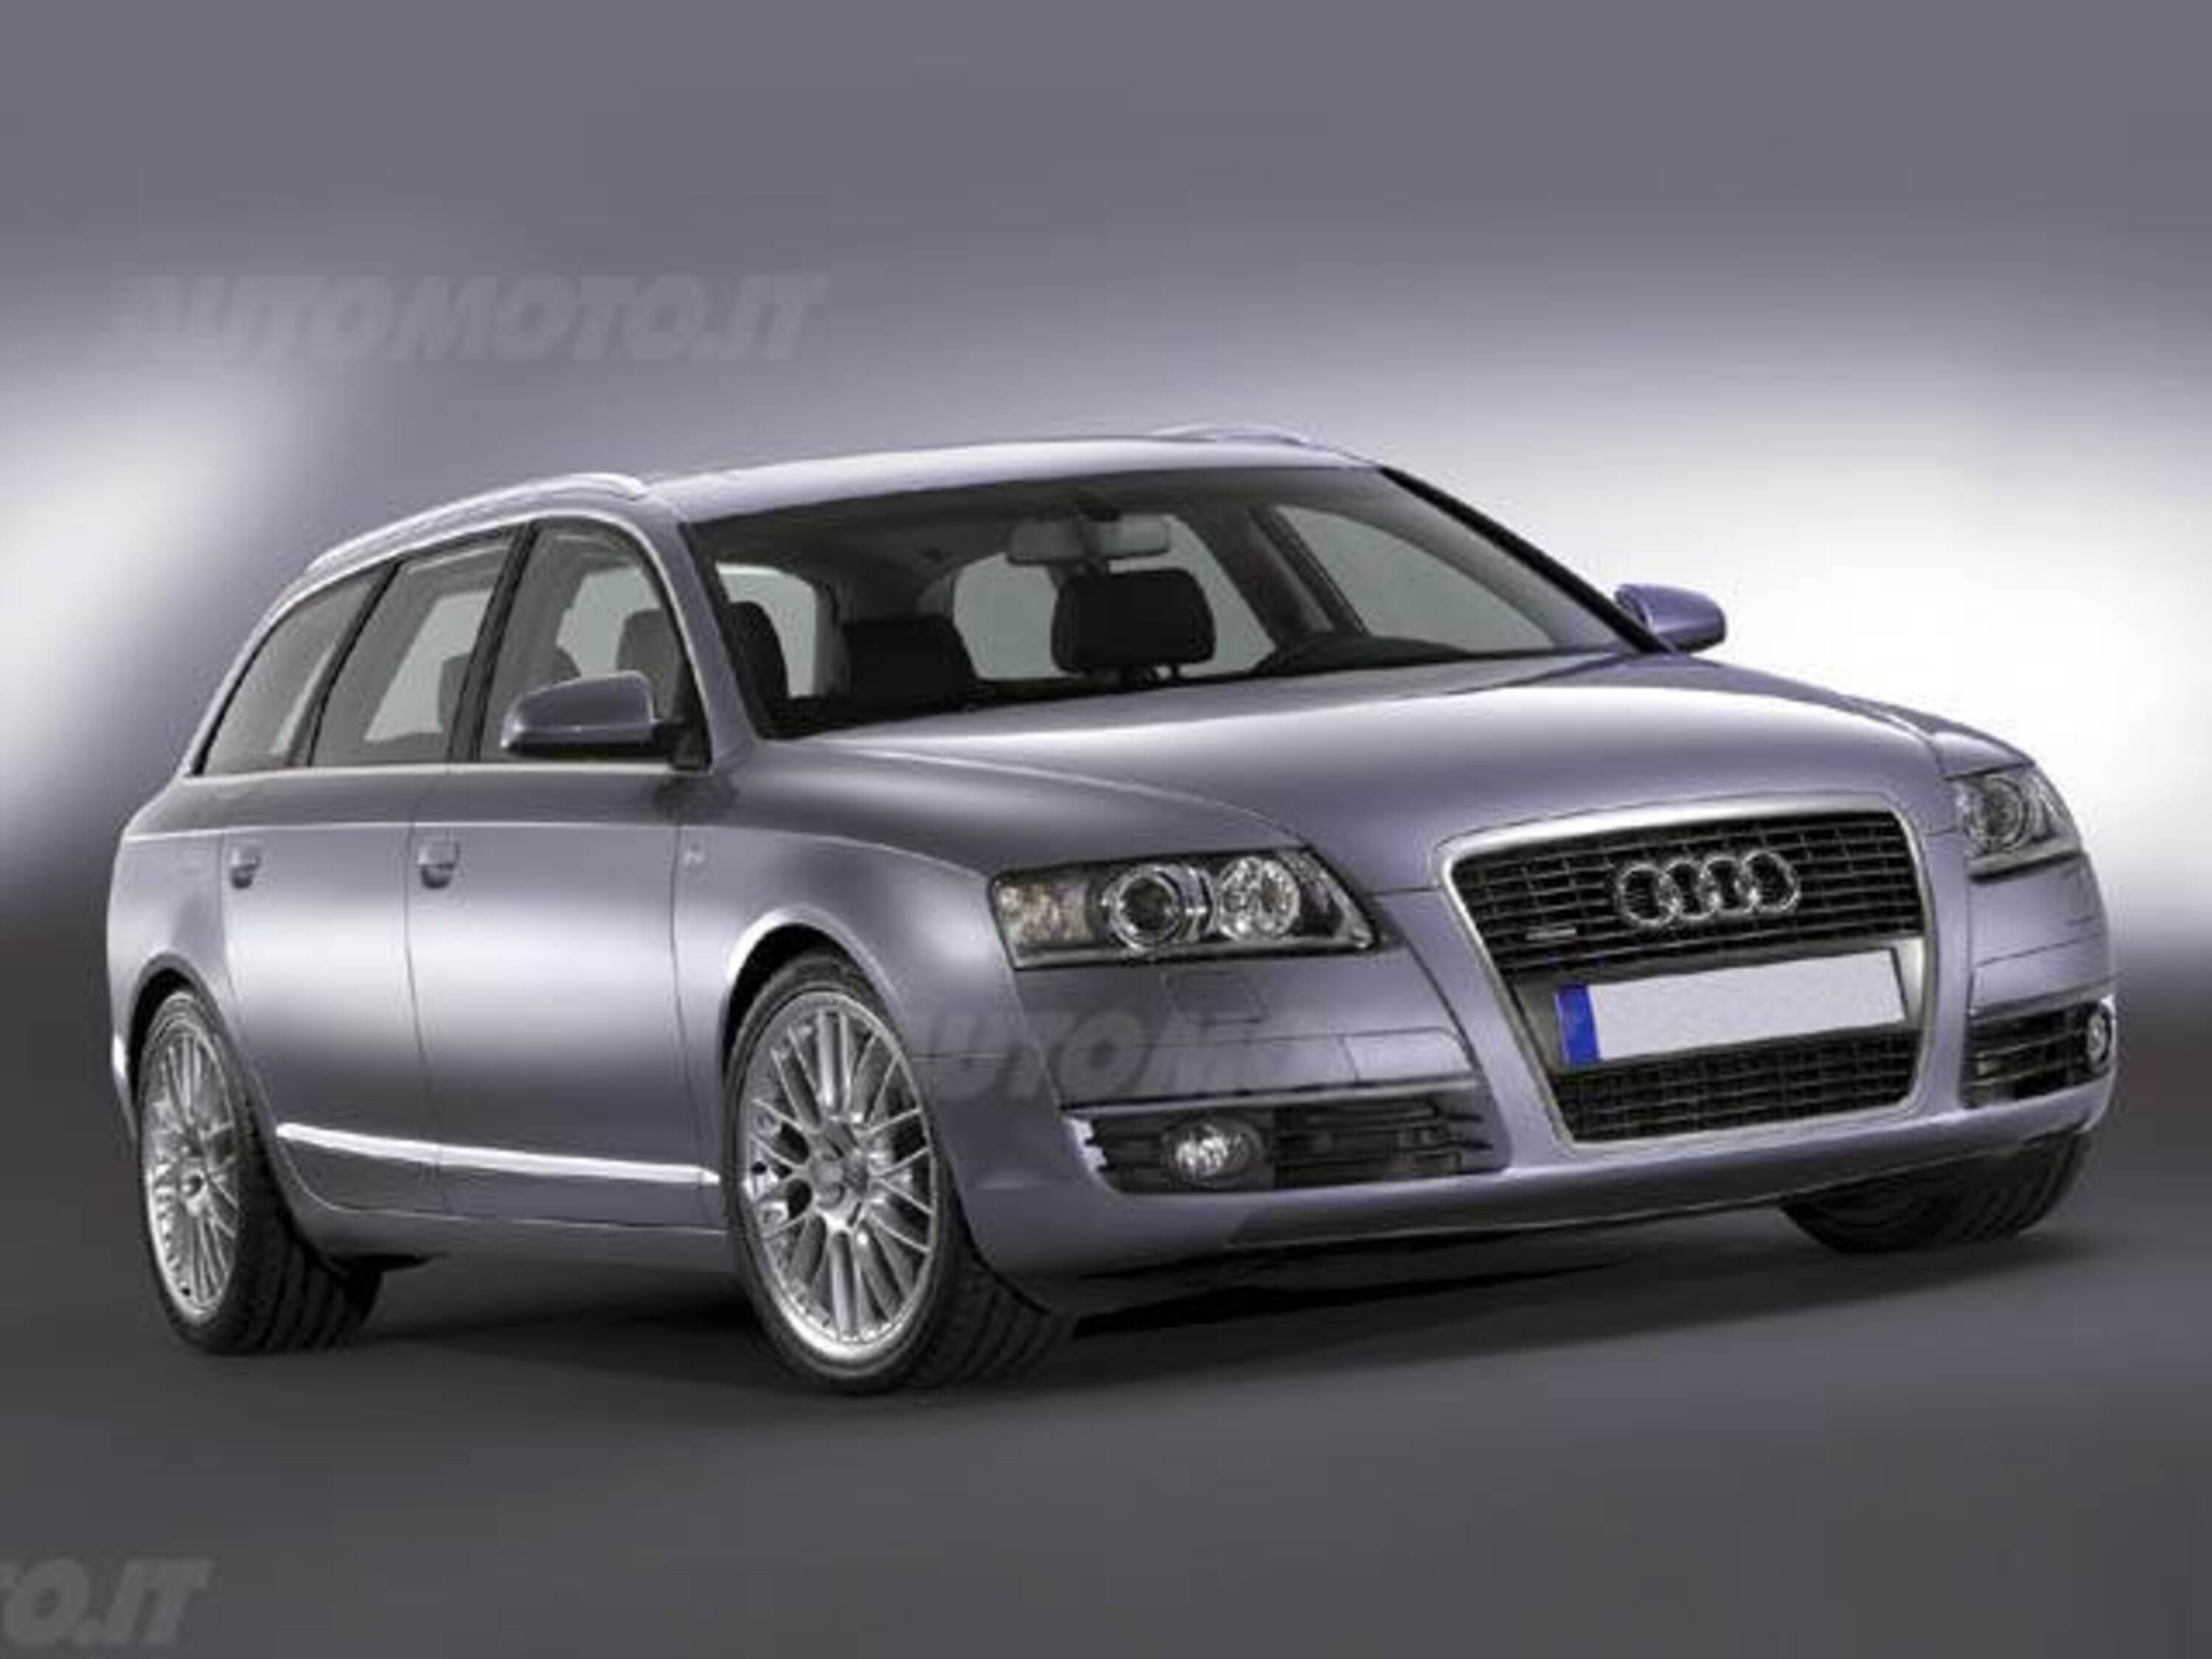 Audi A6 Avant 2.4 V6 multitronic Limited Edition